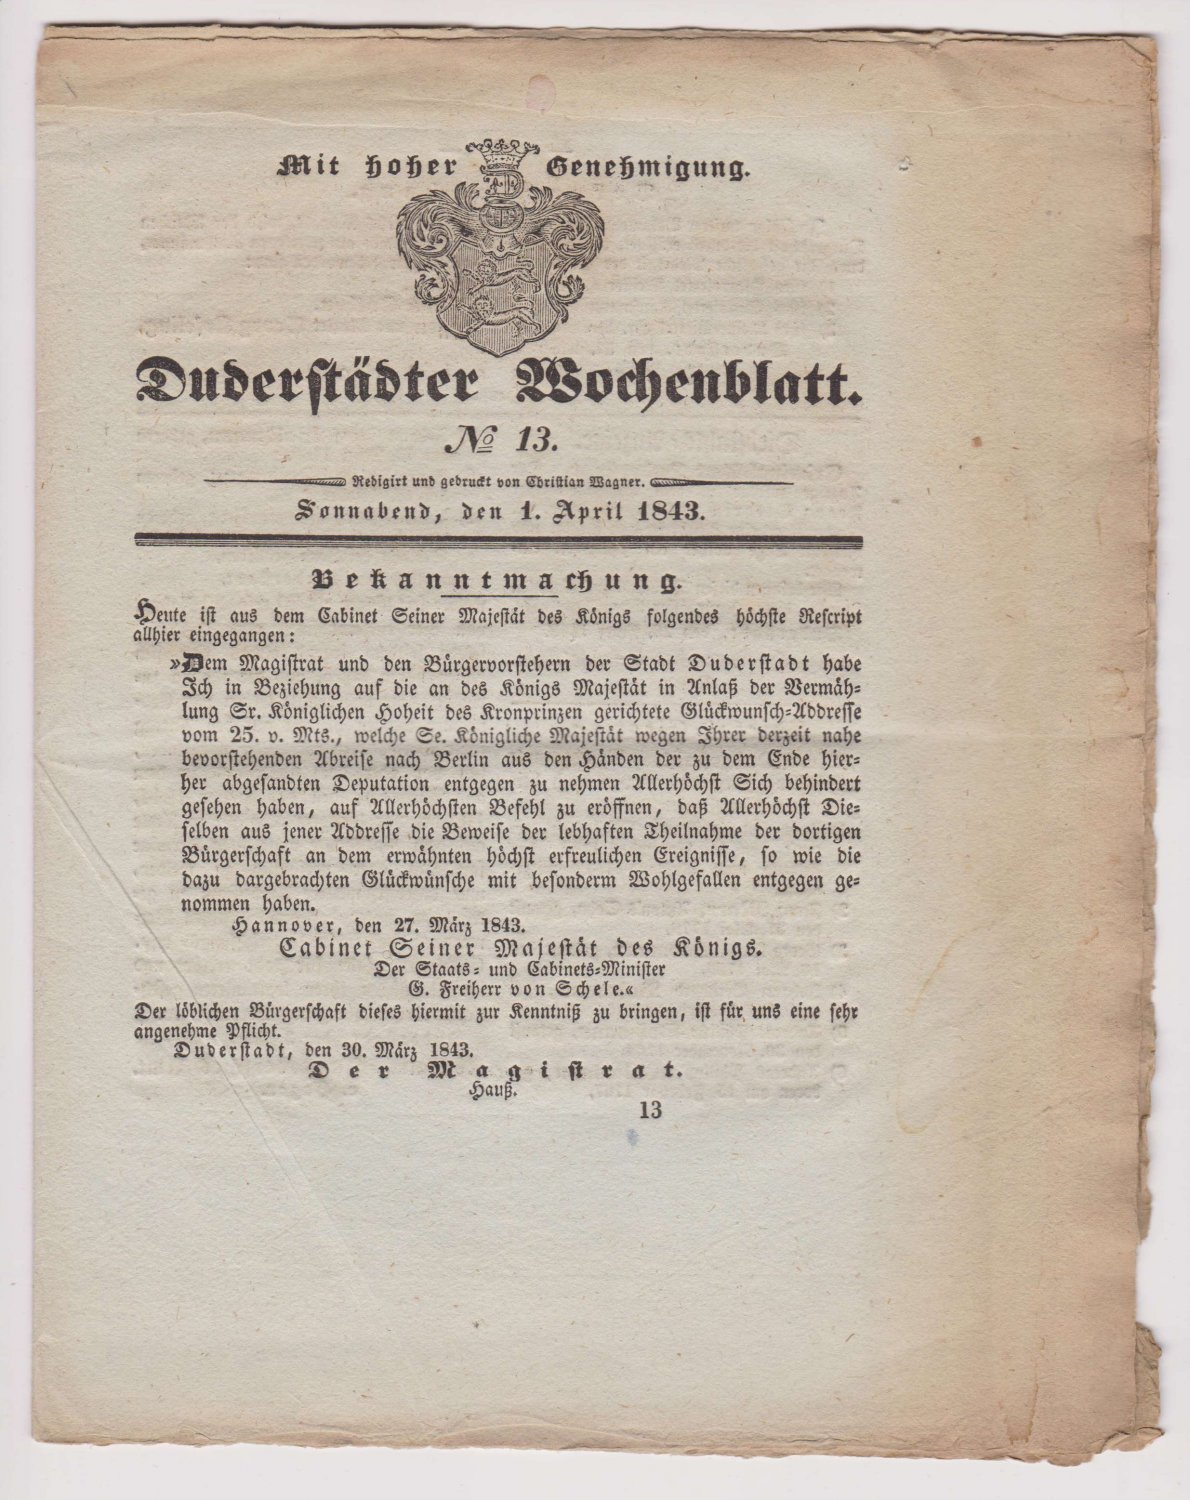   Duderstädter Wochenblatt Nr. 13. / Sonnabend, den 1. April 1843. 